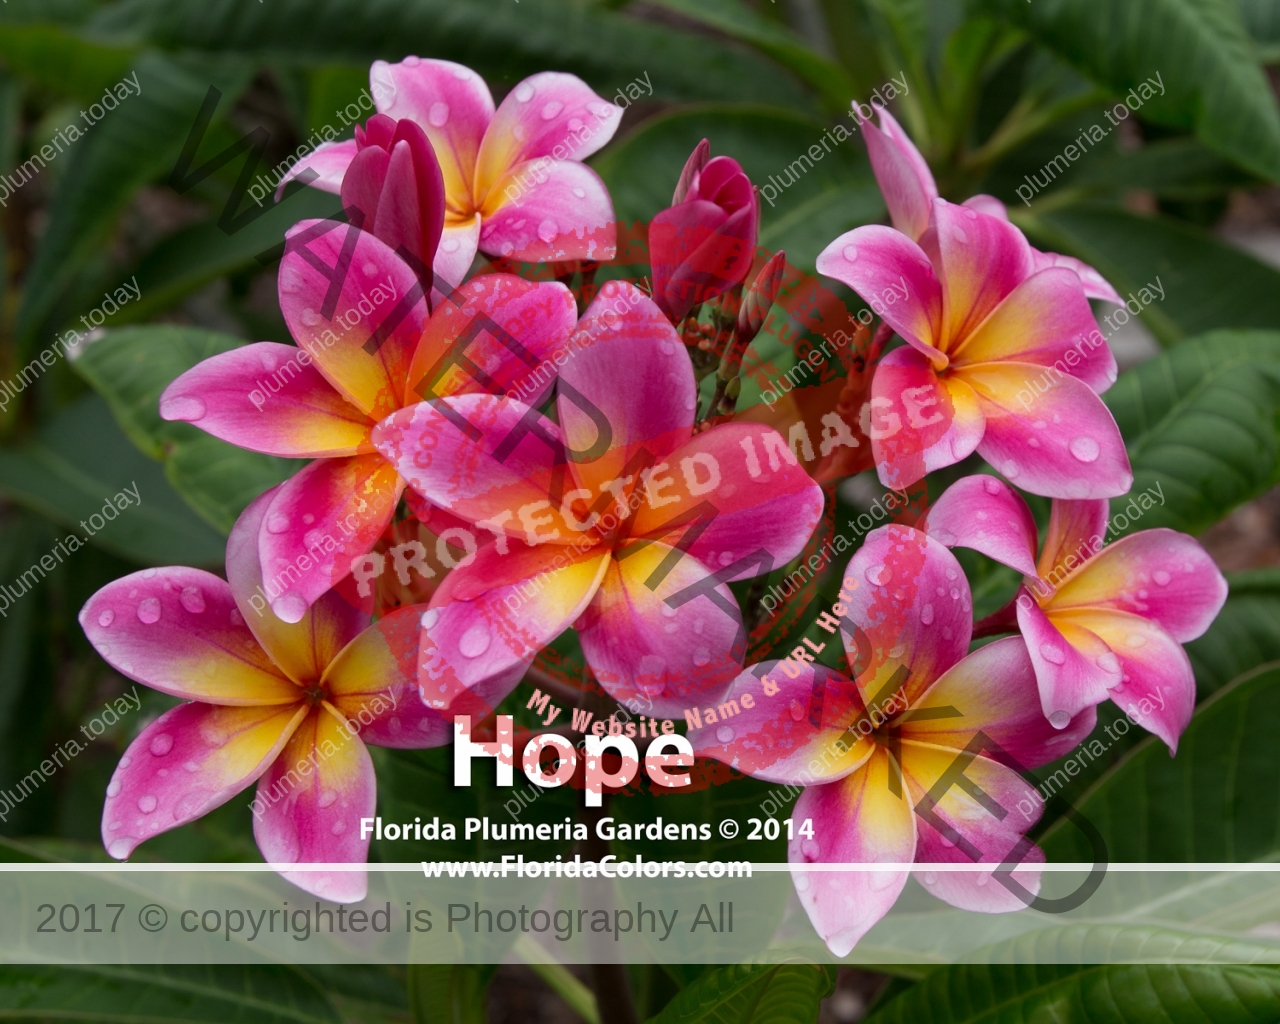 Hope_6752.jpg